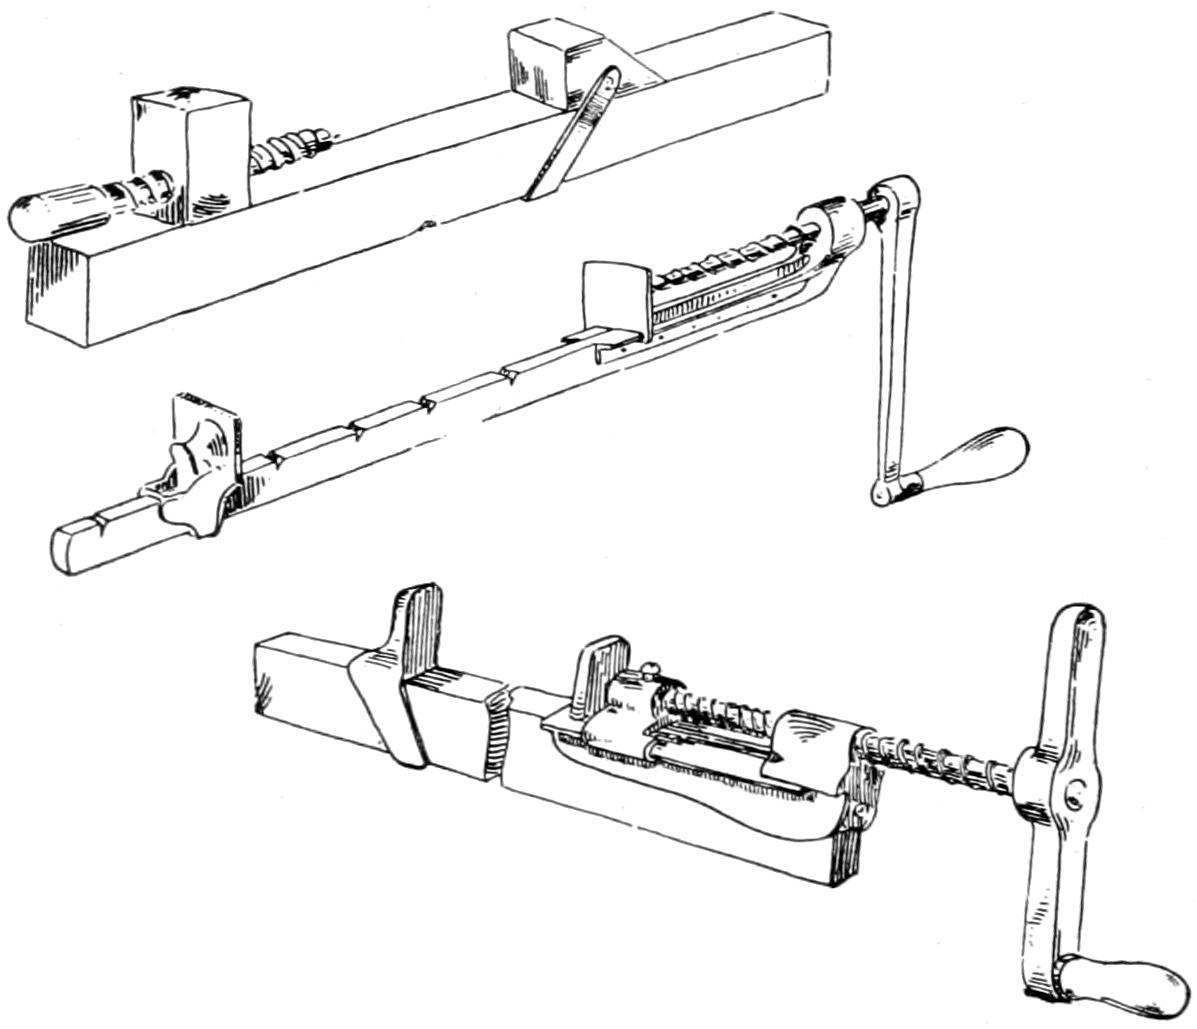 Three bar clamps